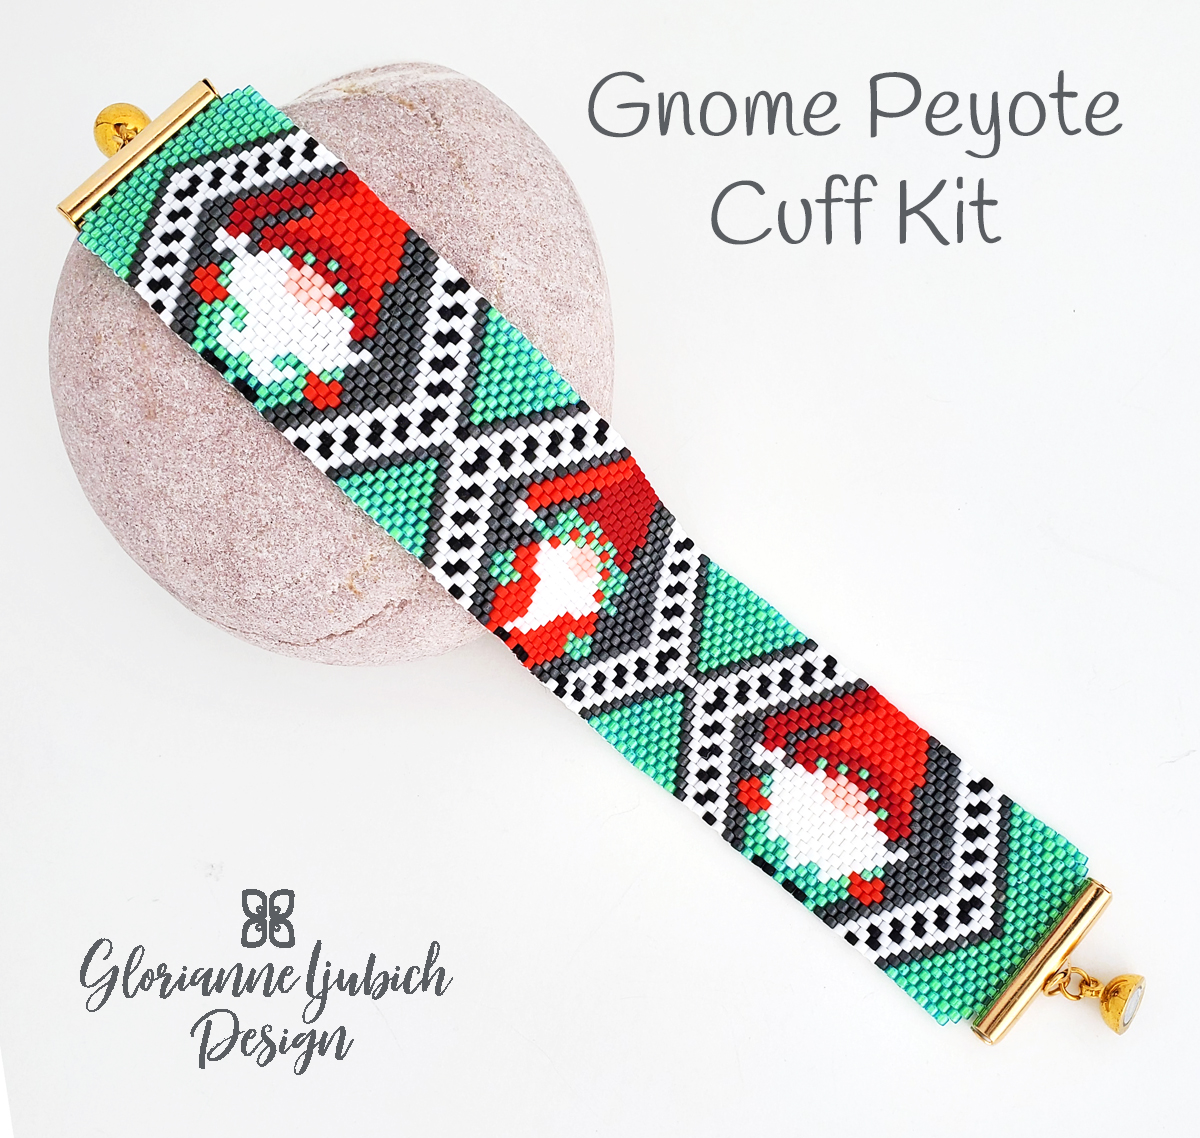 Gnome Peyote Cuff Kit